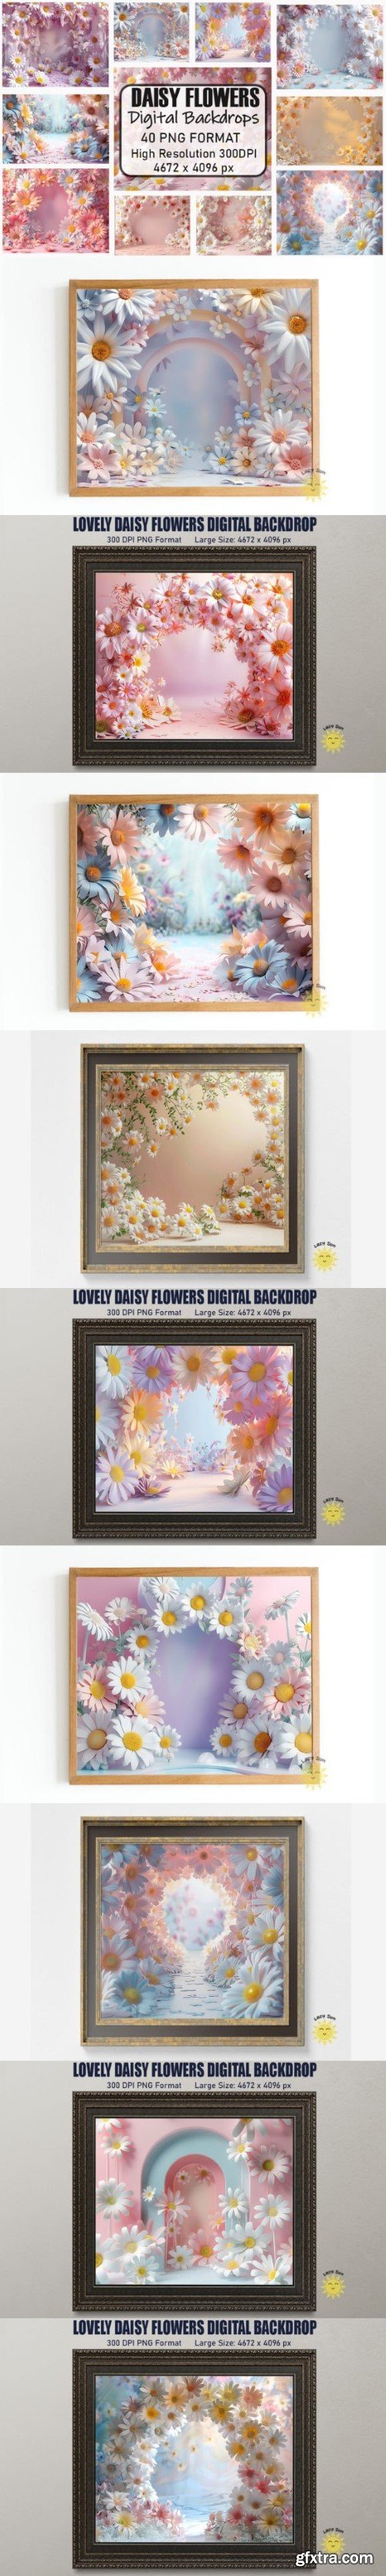 Lovely Daisy Flowers Digital Backdrops